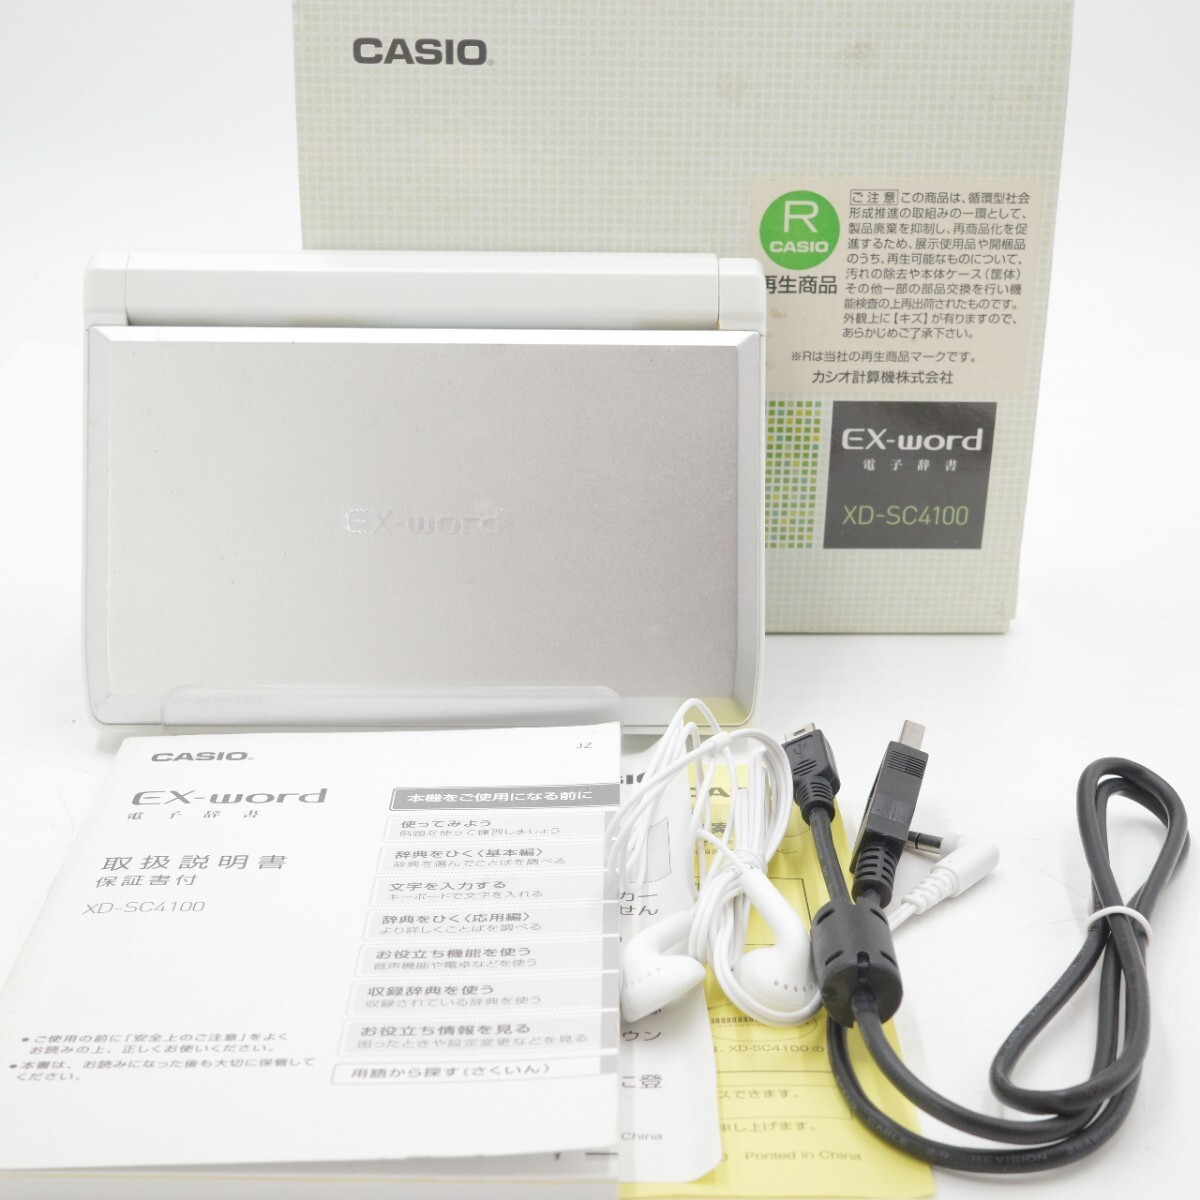 CASIO Casio EX-wordeks word computerized dictionary XD-SC4100 silver operation verification ending 